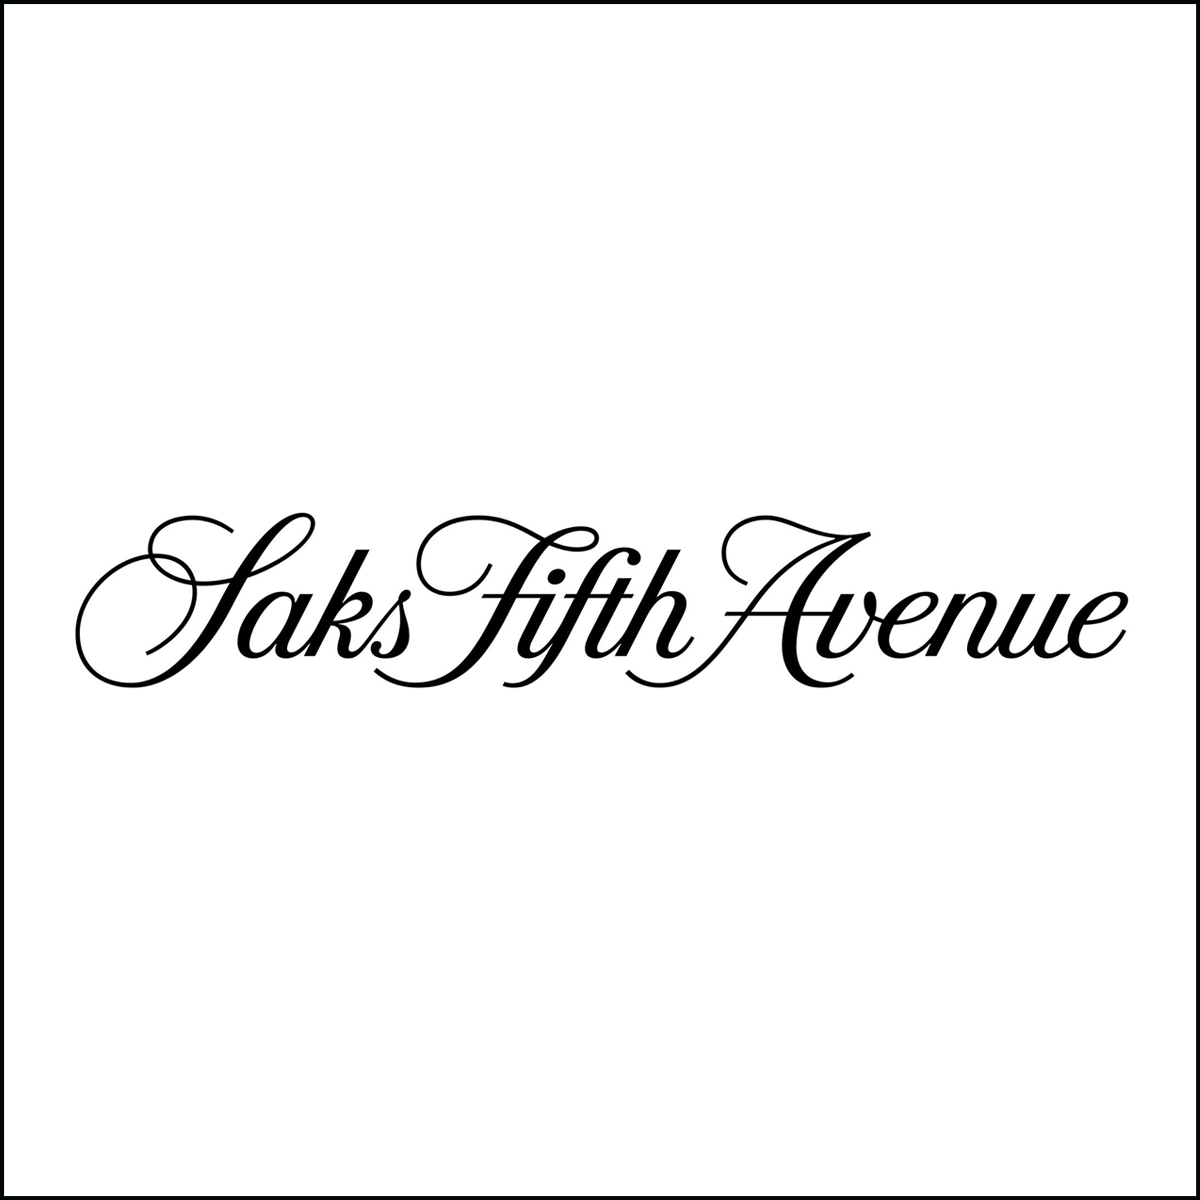 Saks_Fifth_Avenue_logo.png